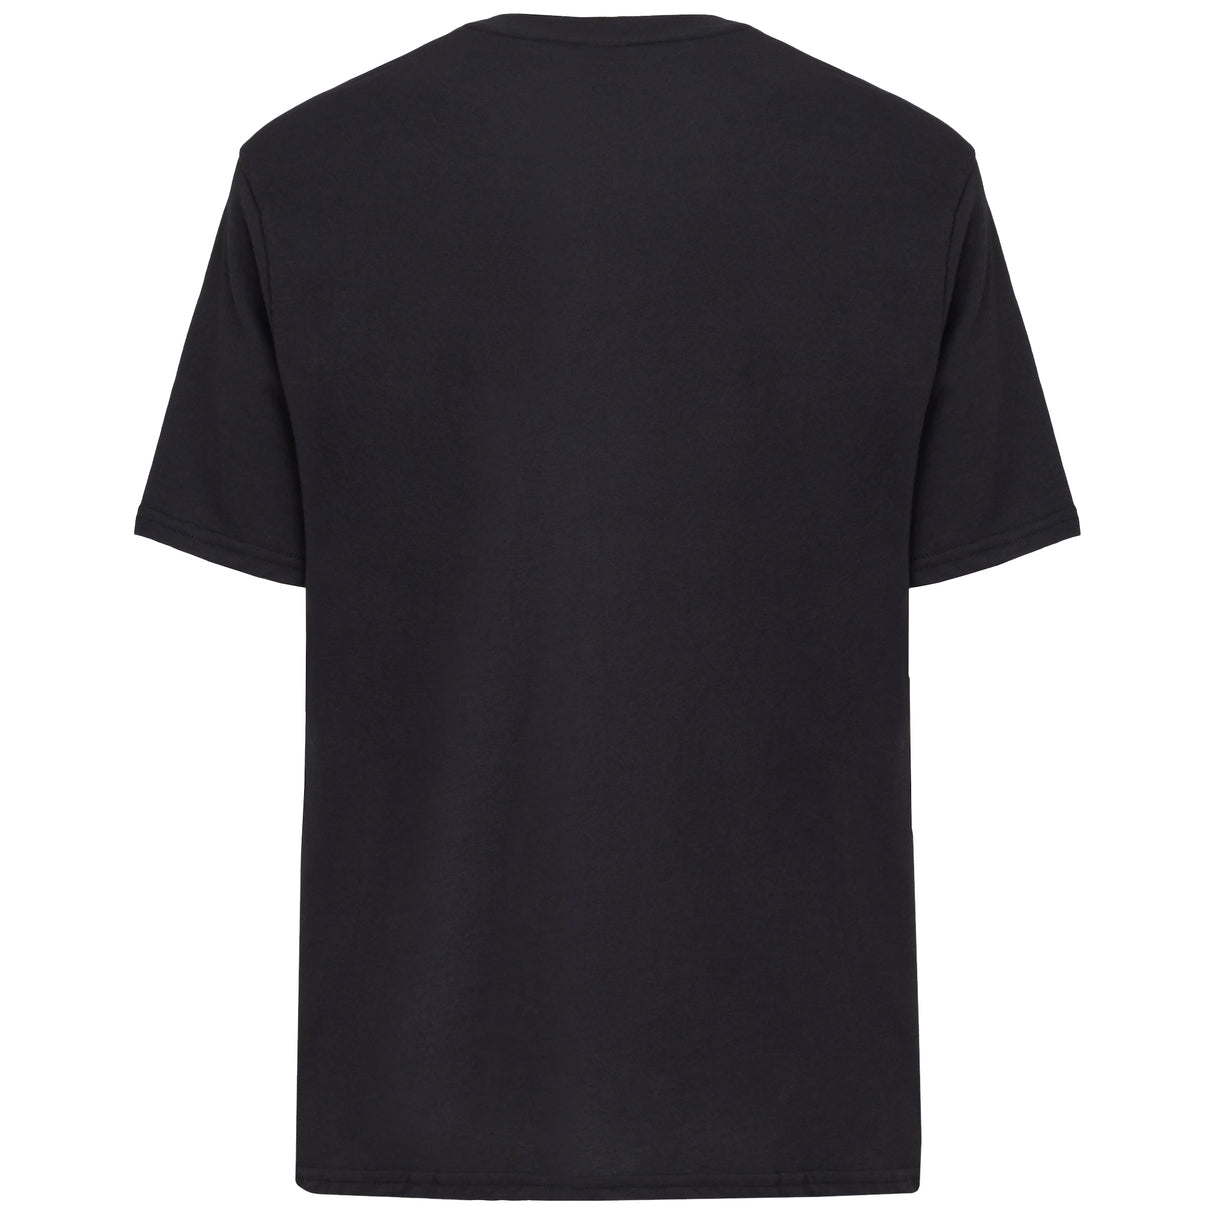 Mark II T-Shirt (Black/White)